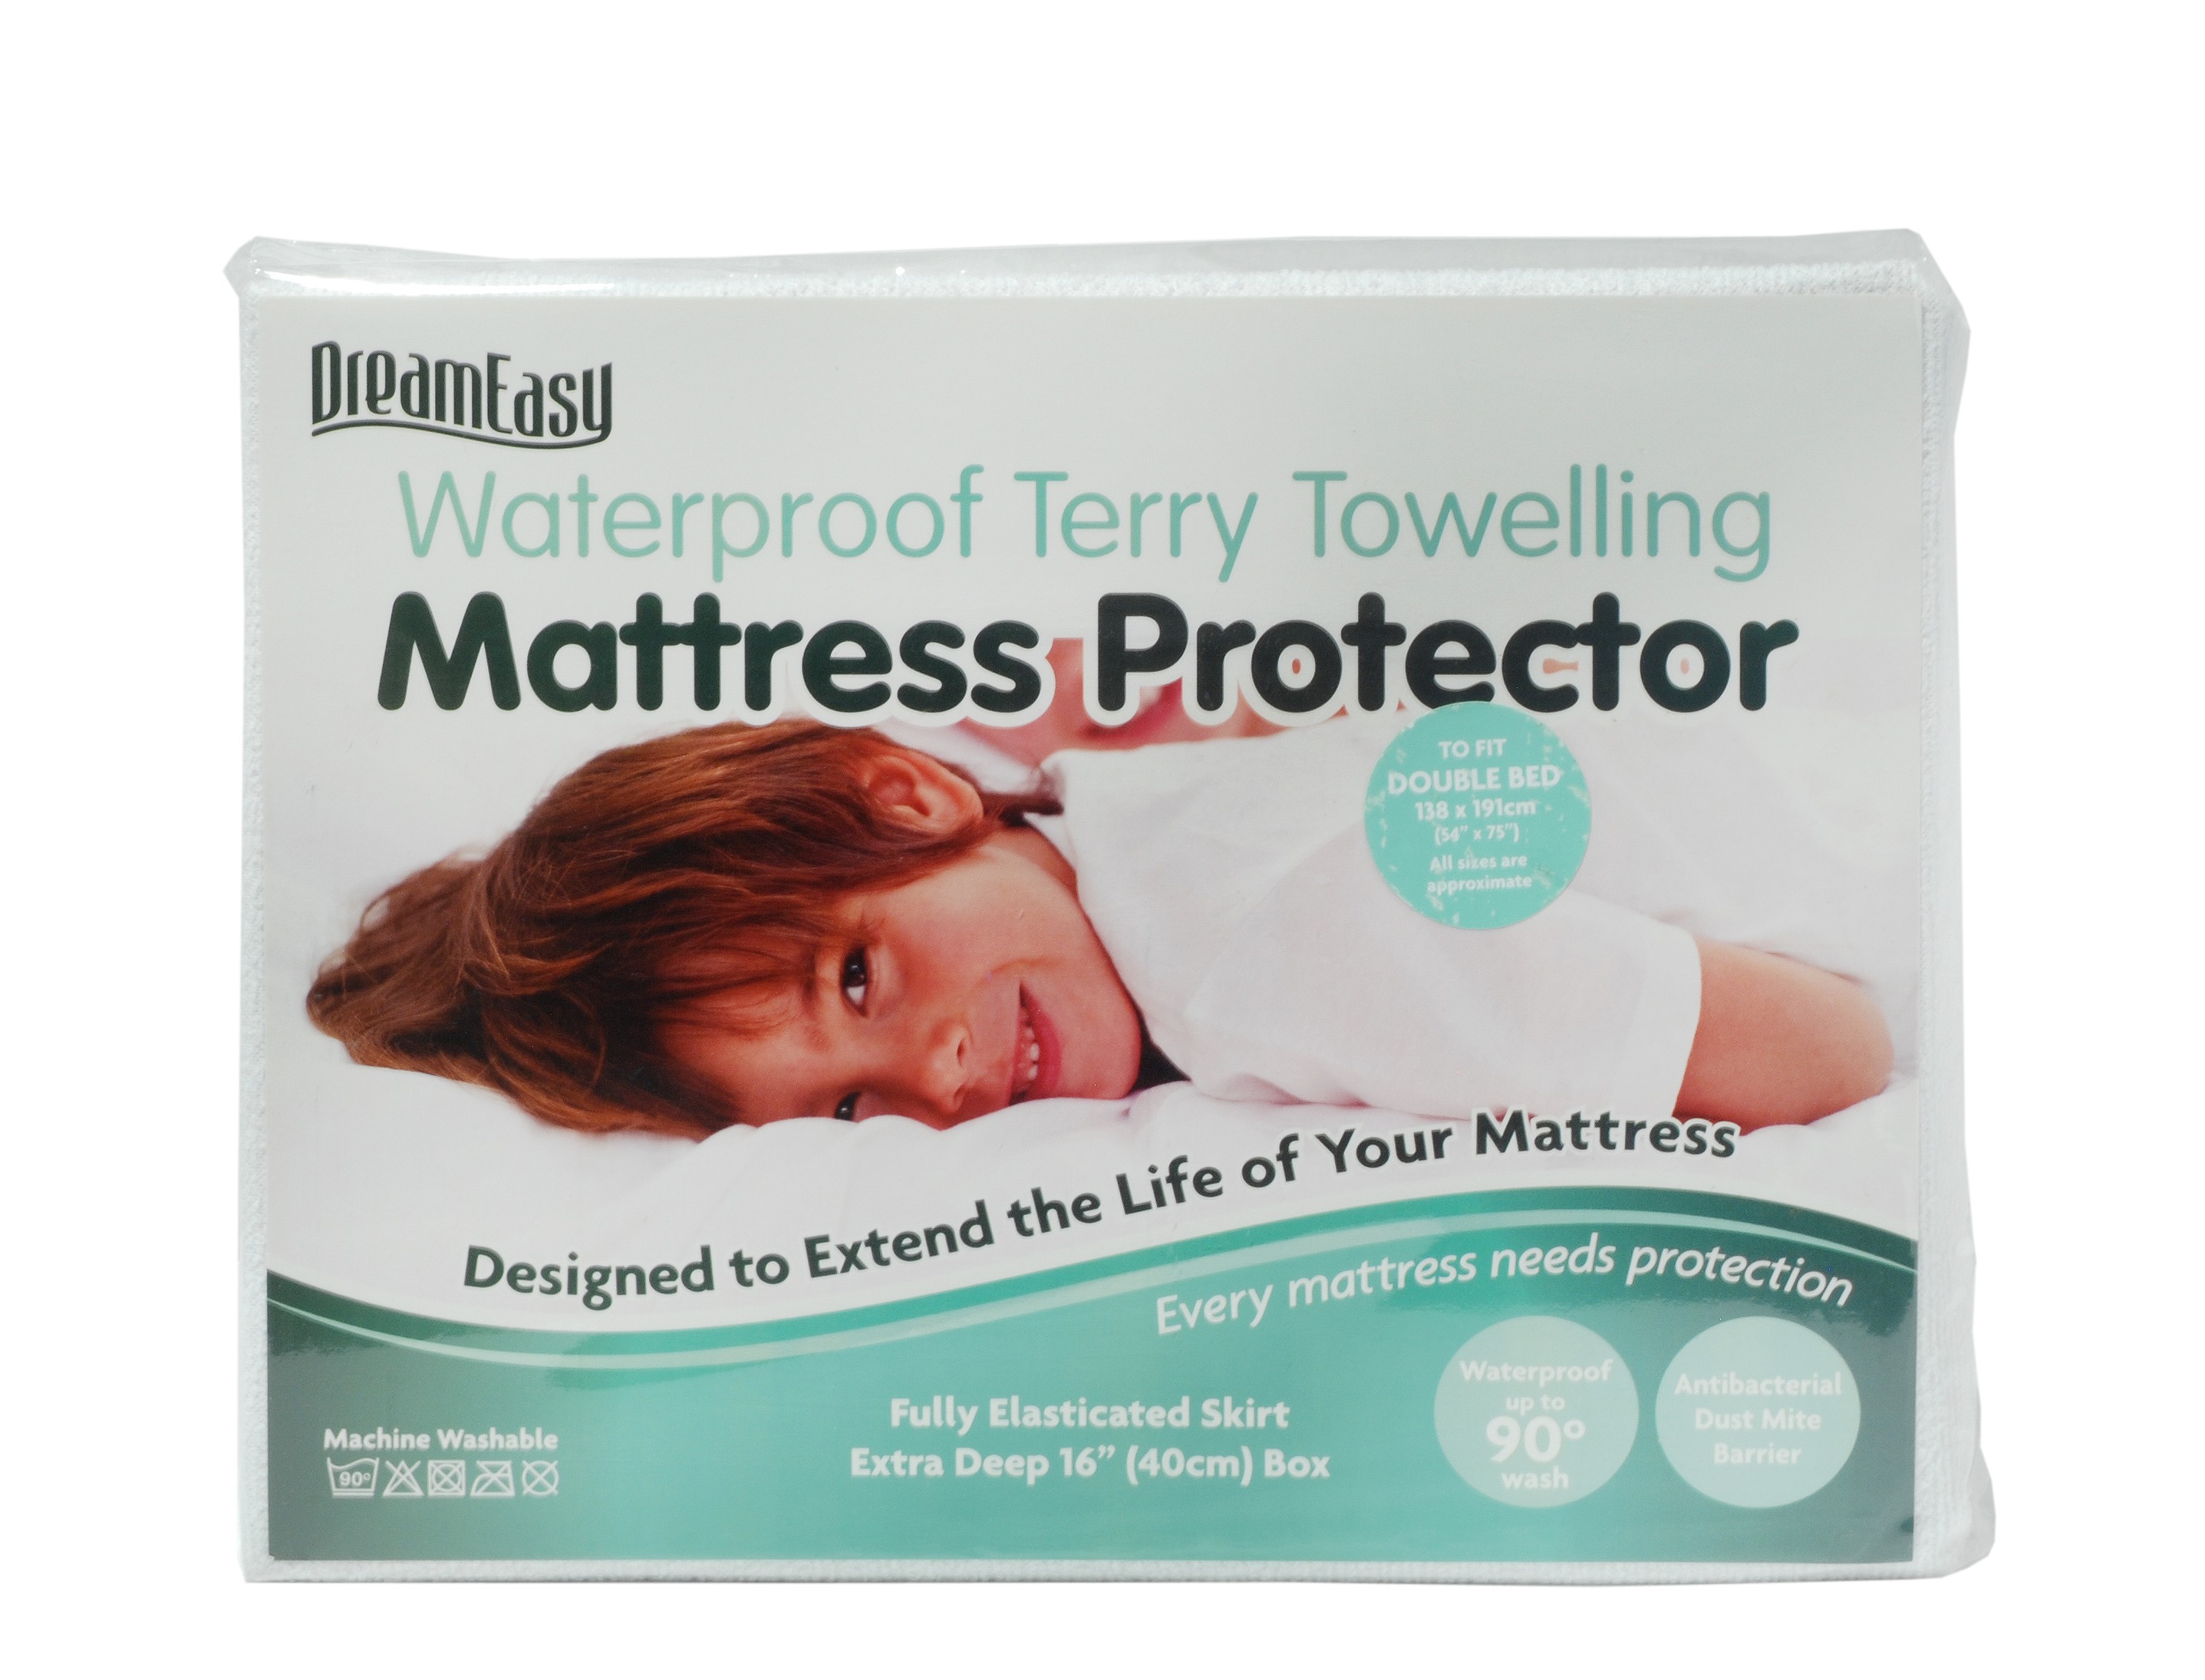 Box of DreamEasy Premium Terry Towelling Waterproof Mattress Protectors